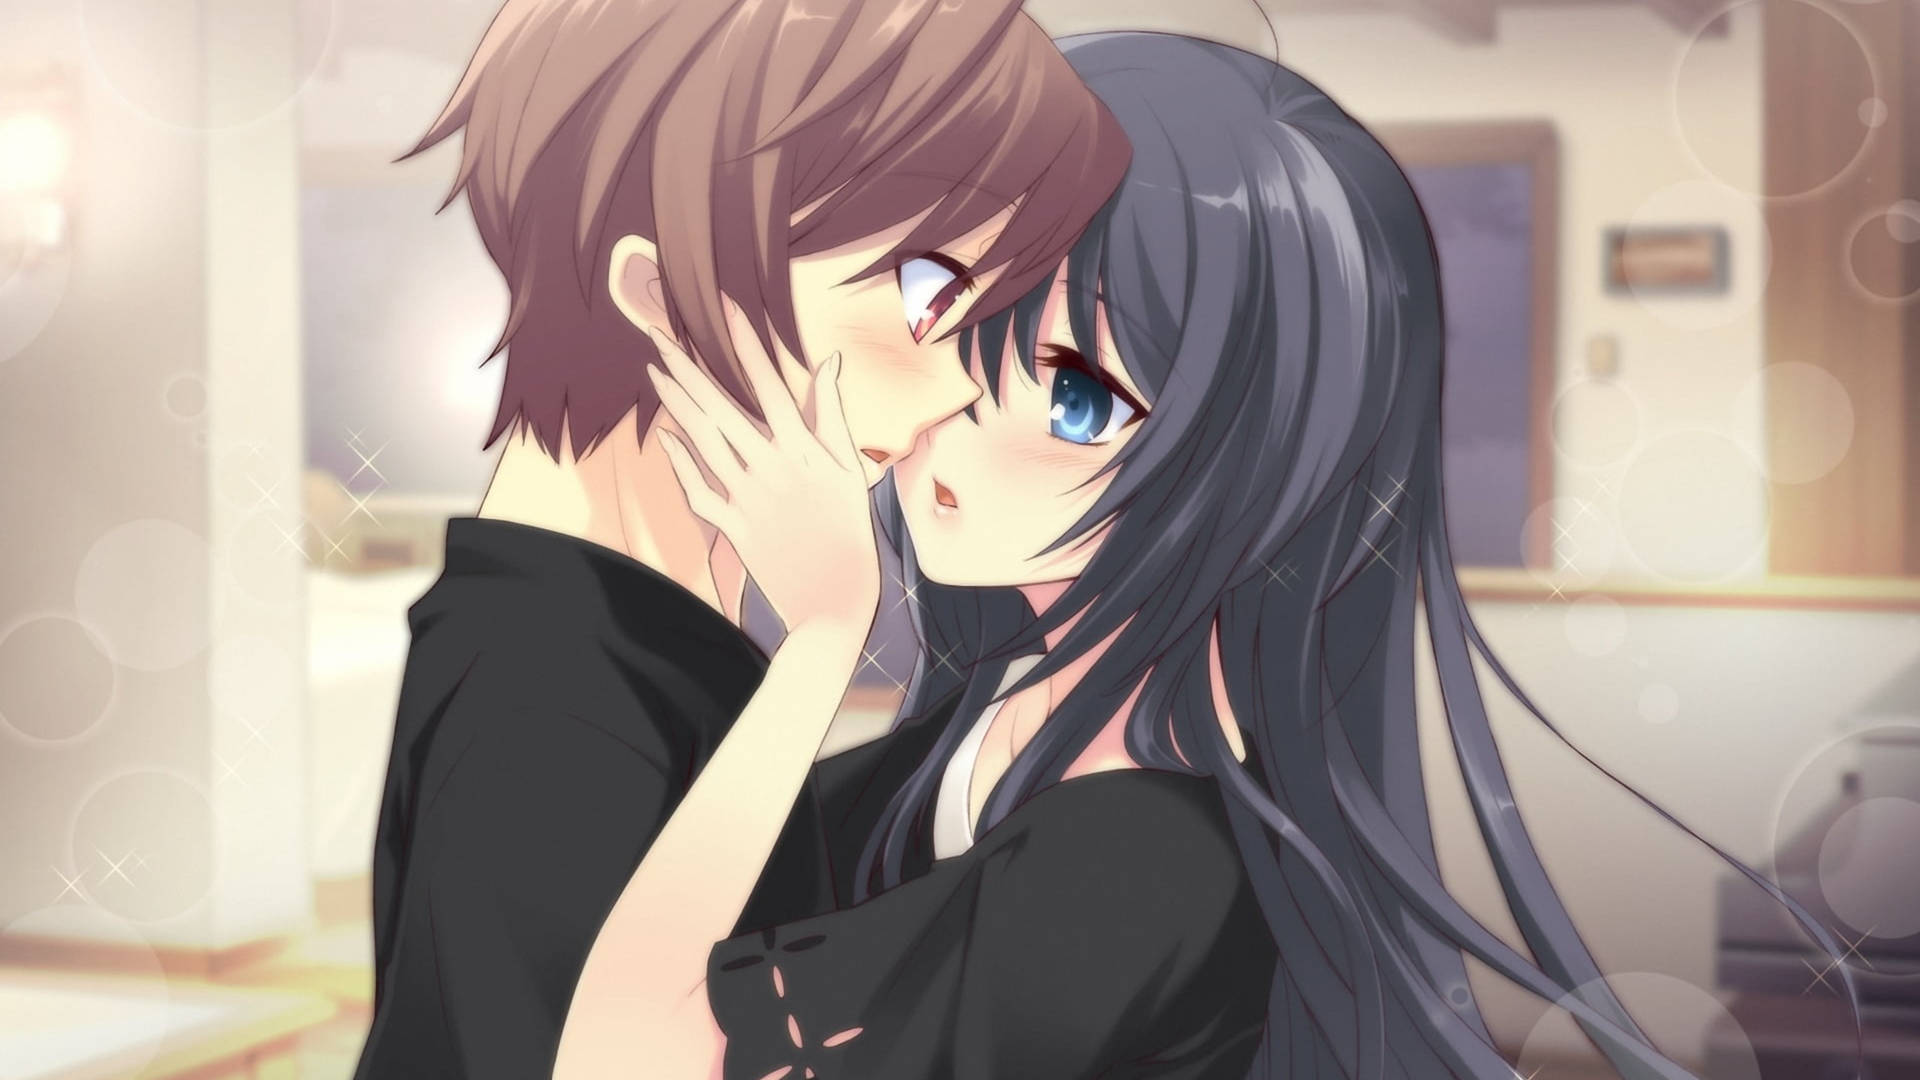 Blushing Cute Anime Couple